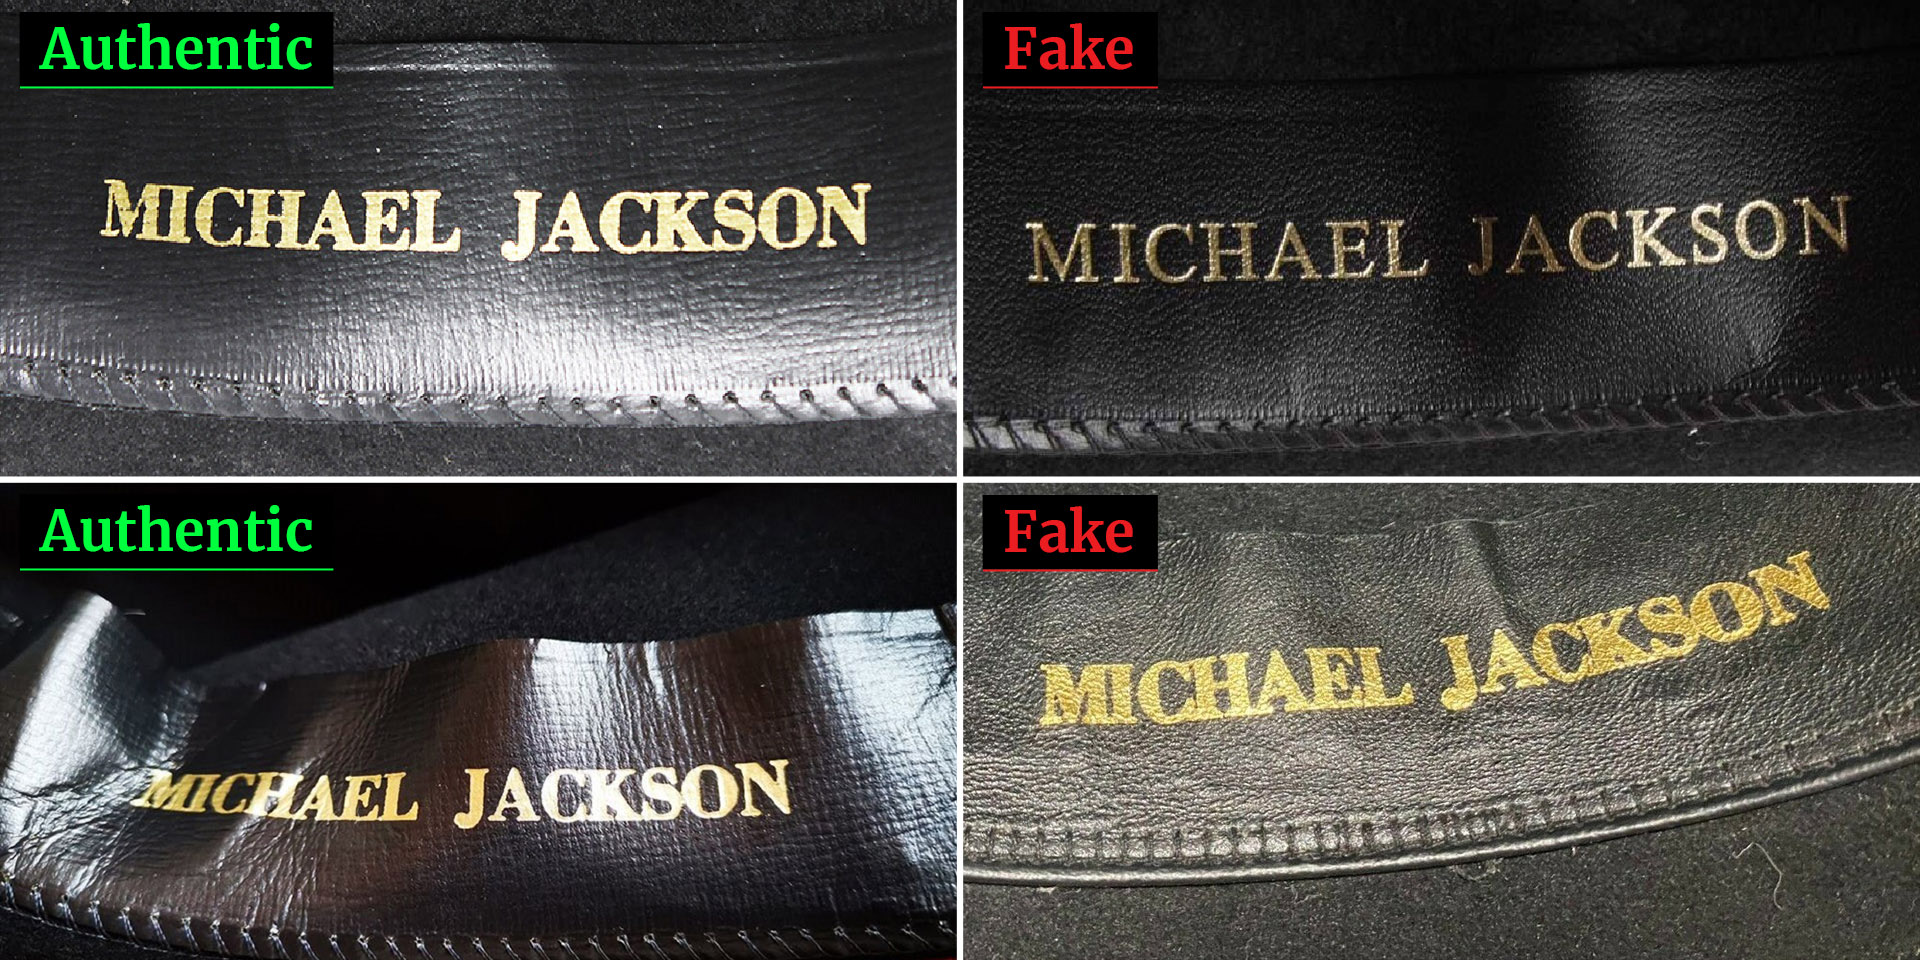 How to spot a fake Michael Jackson fedora?